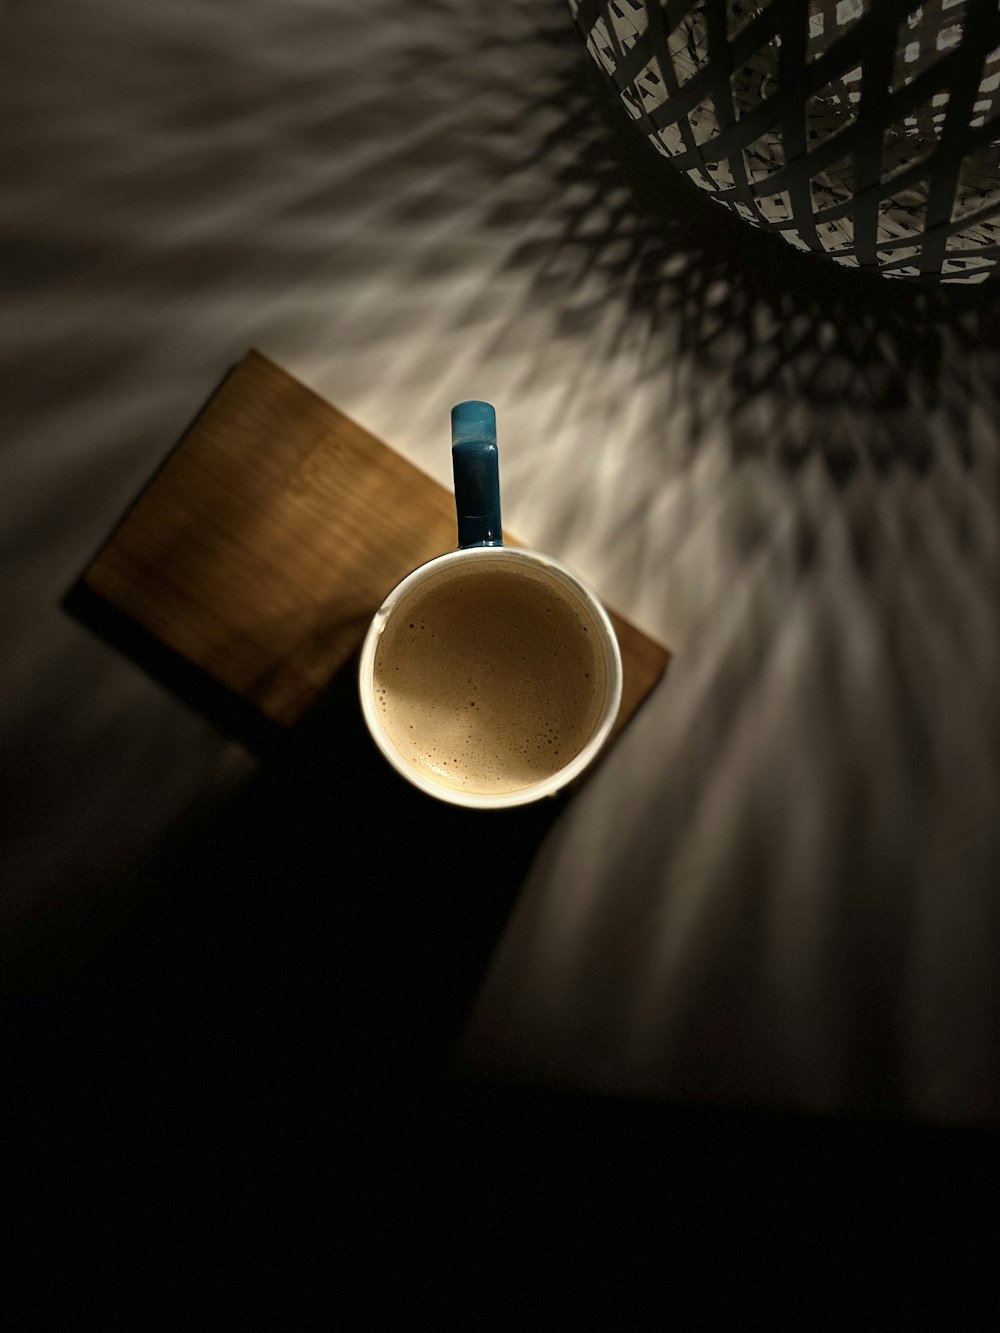 white ceramic mug on brown wooden table